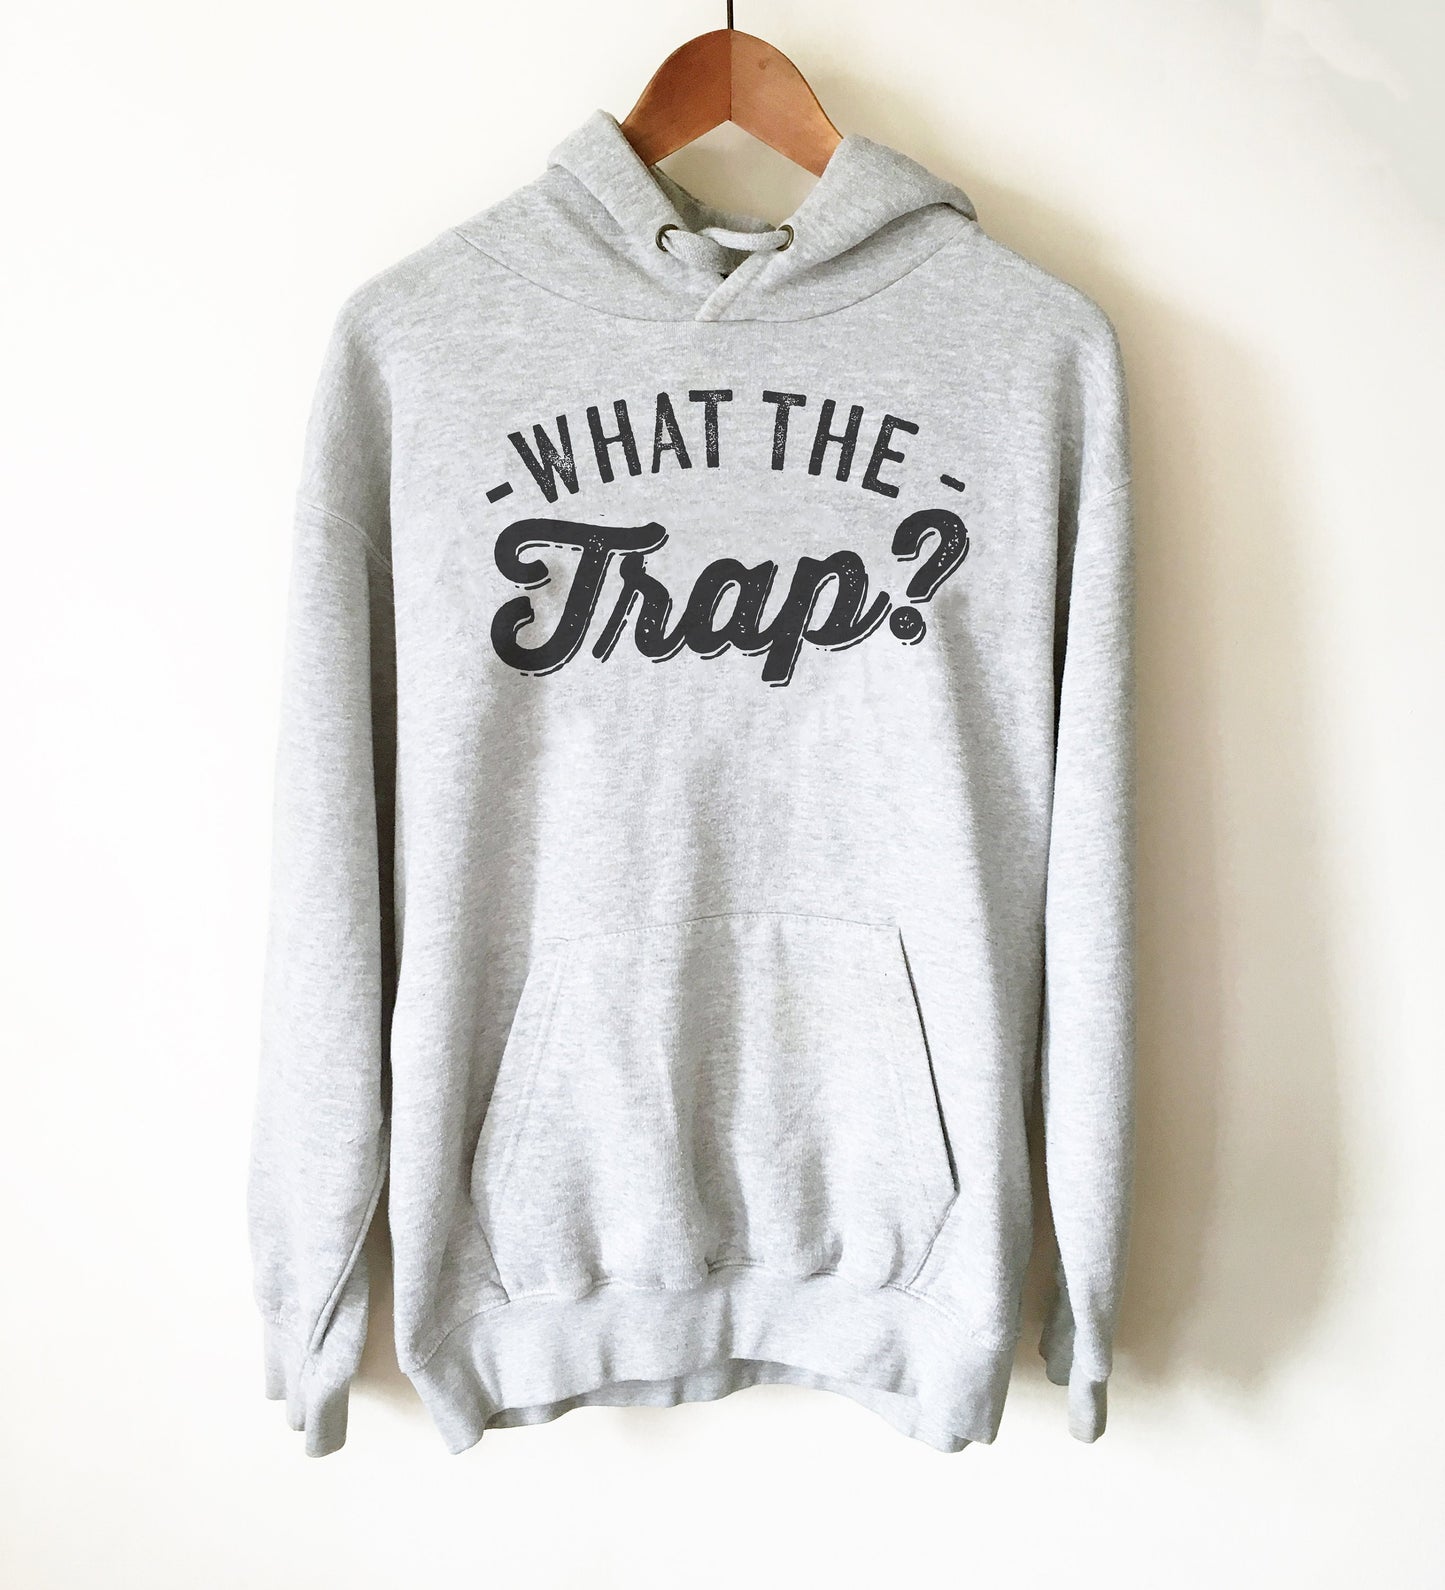 What The Trap? Hoodie - Trap Shooting Shirt, Trap Shooting Gift, Clay Pigeon Shooting, Clay Shooting, Shooting Shirt, Skeet Shooting